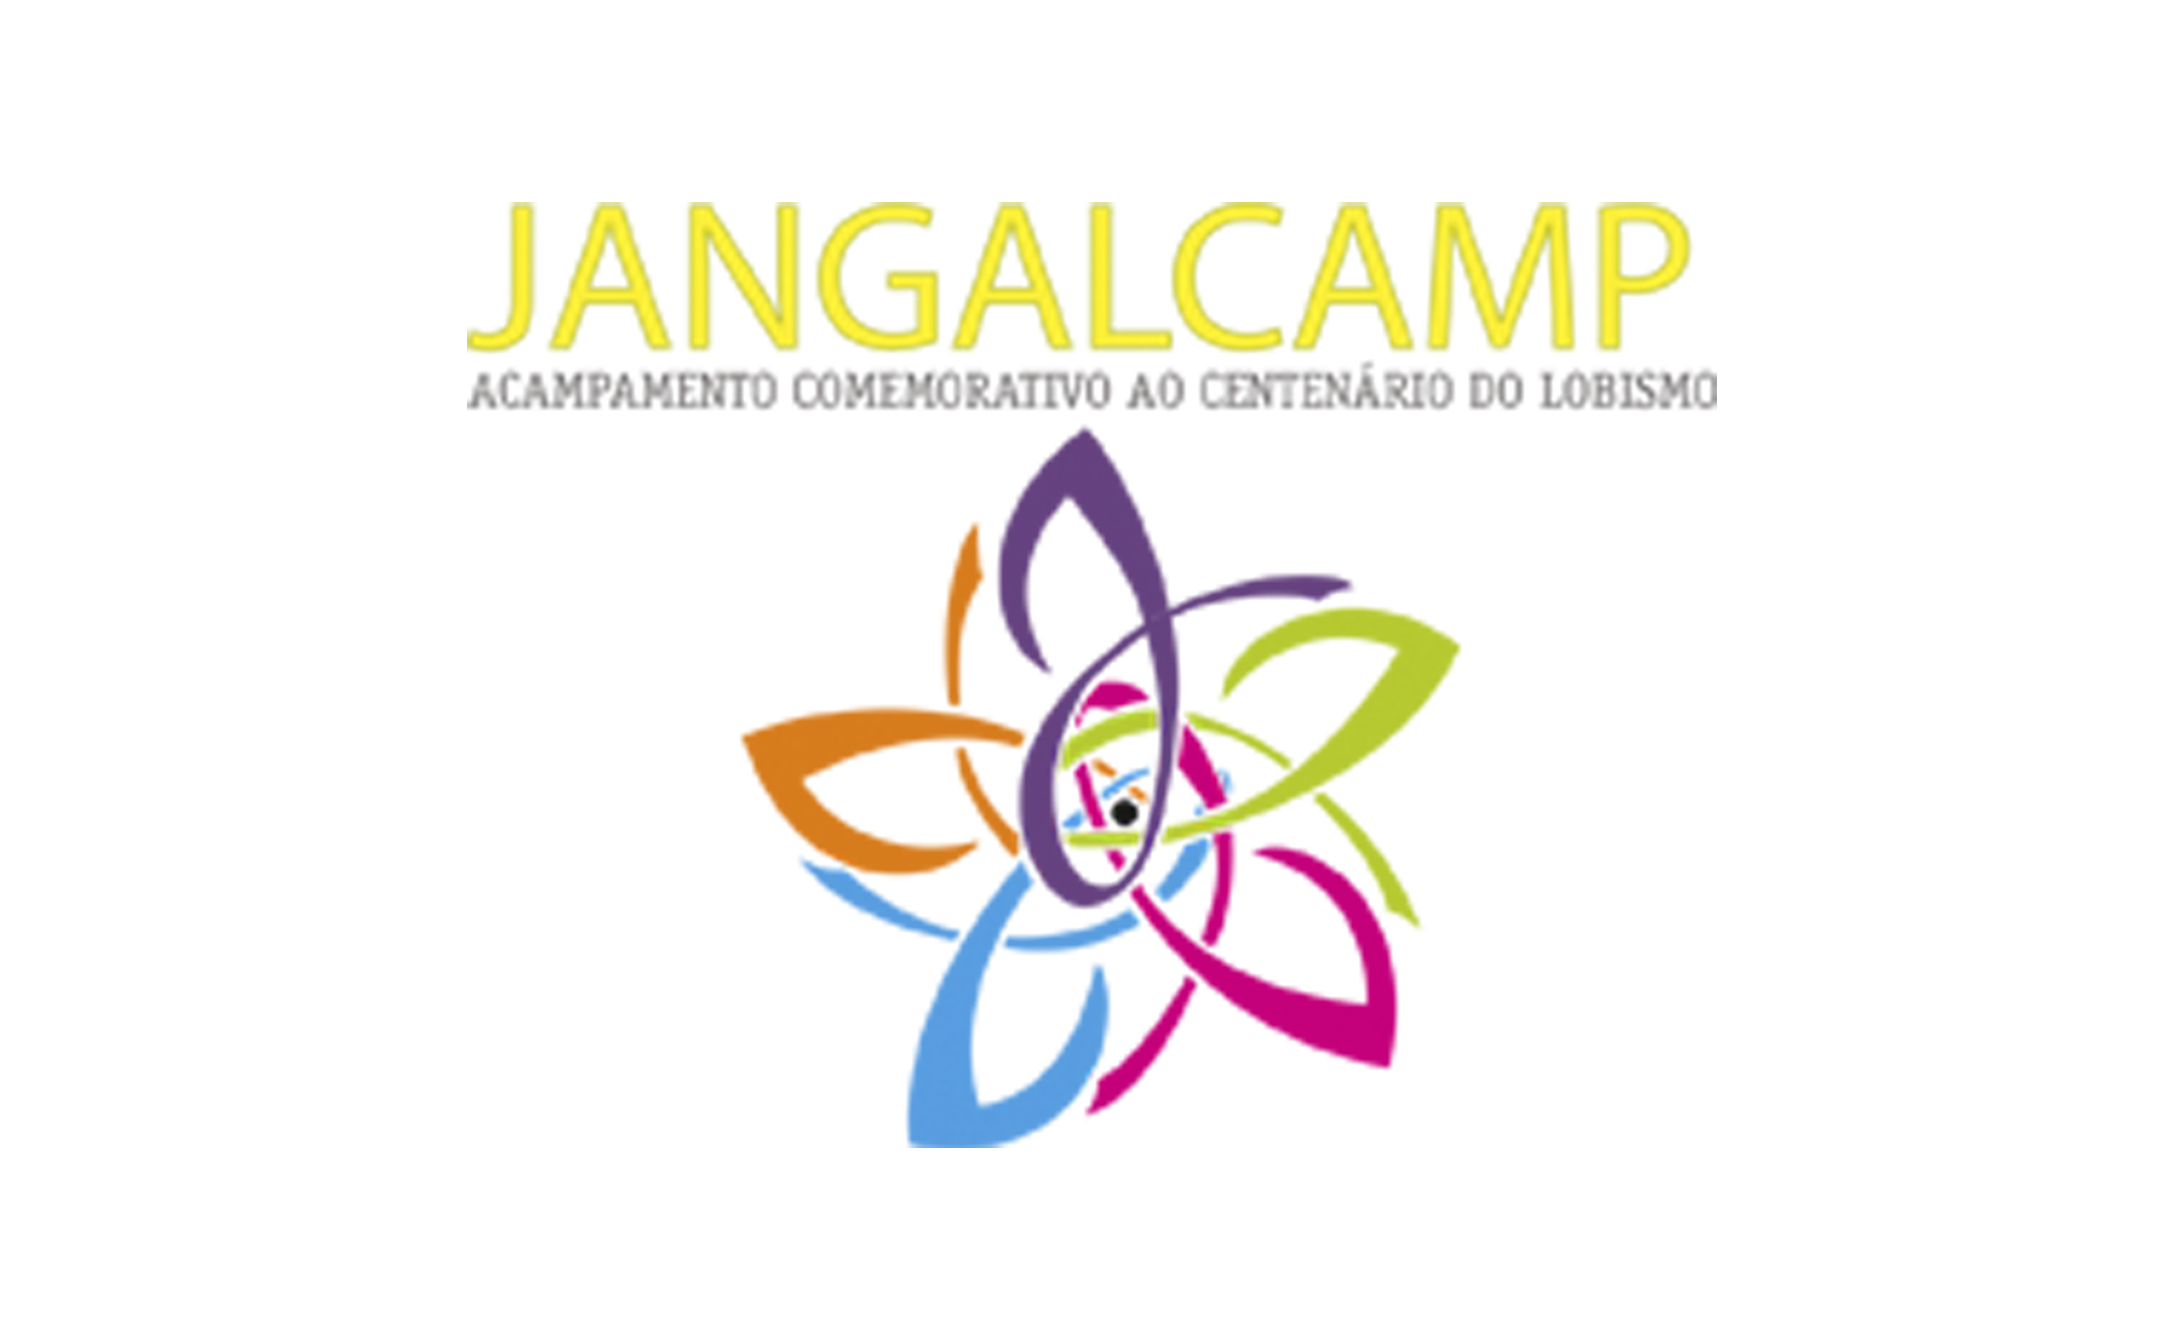 Boletim 4 – Últimos lembretes para o Jangalcamp 2016!